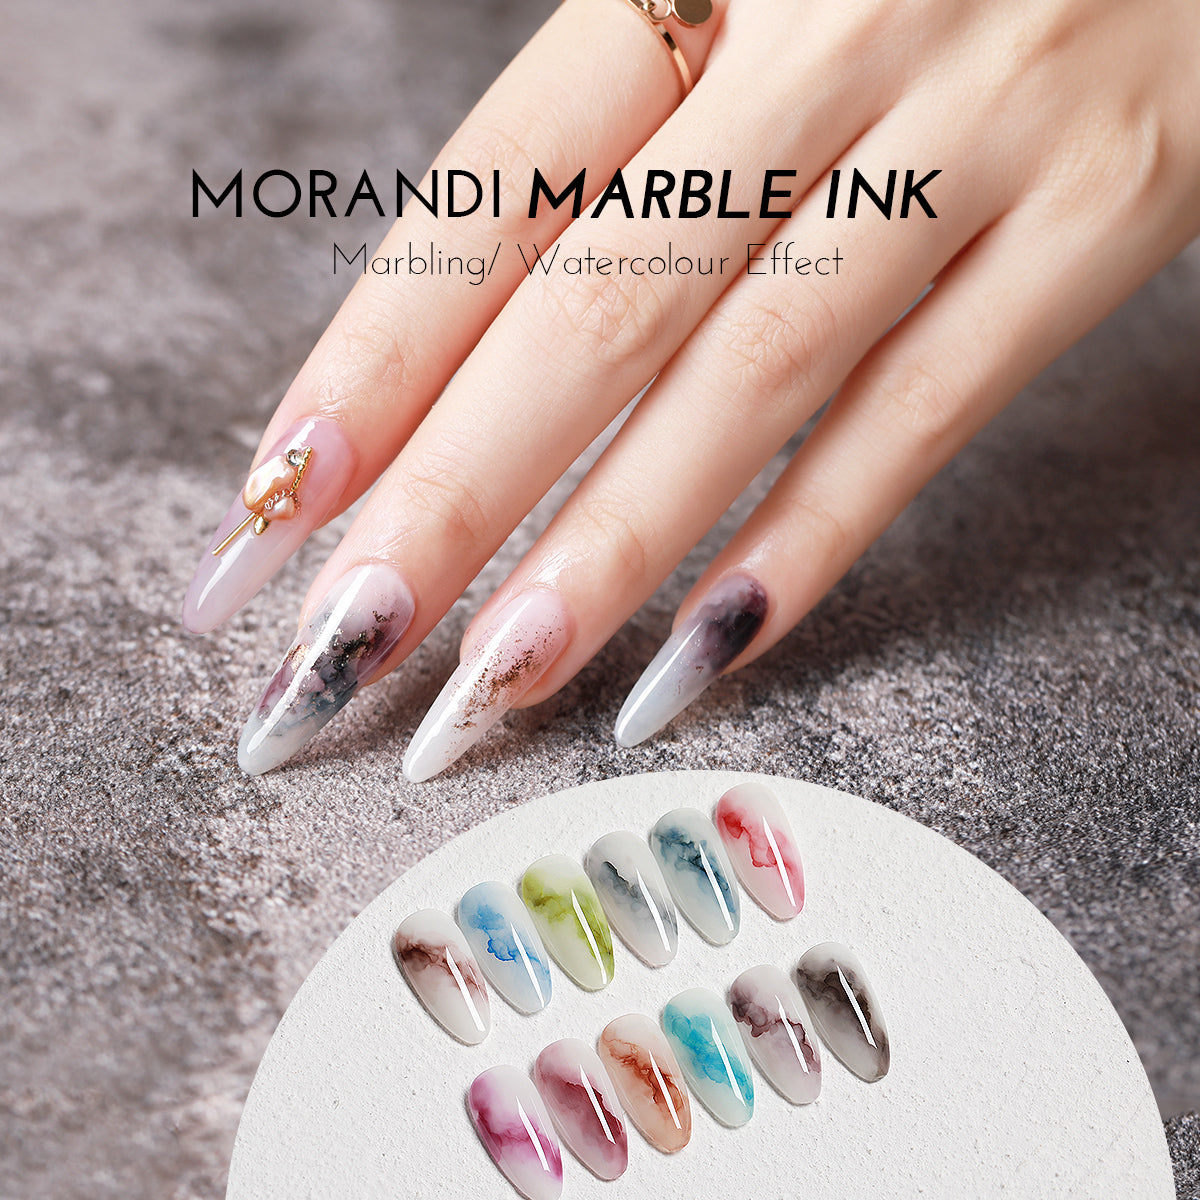 AS Morandi Marble Ink Cover